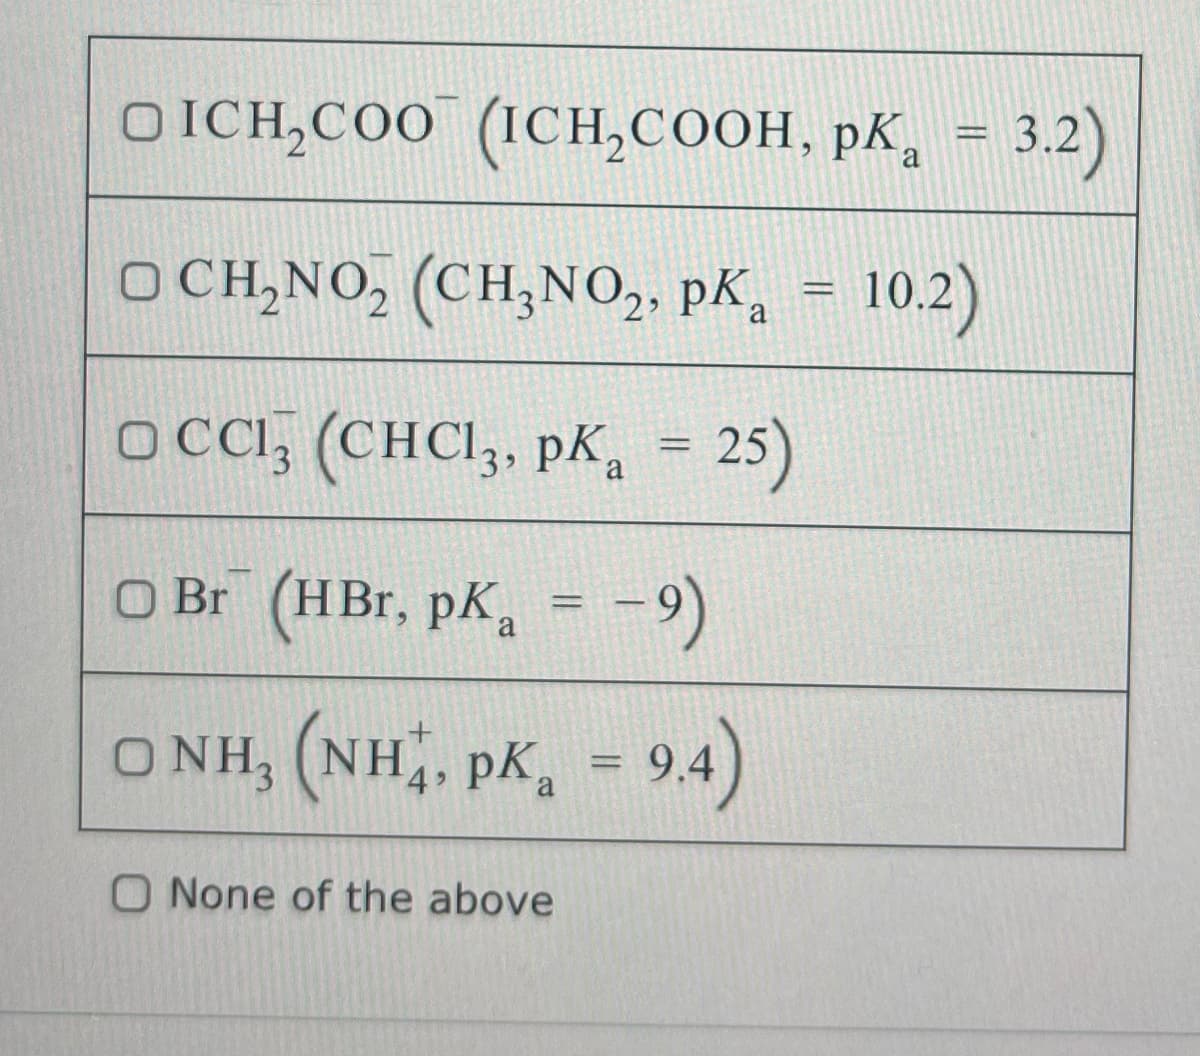 OICH₂COO (ICH₂COOH, pK = 3.2)
OCH₂NO₂ (CH₂NO₂, PK,
pKa
10.2)
OCC13 (CHCl3, PK₁ = 25)
O Br (HBr, pK₁ = −9)
ONH, (NH,, PK, = 9.4)
a
O None of the above
=